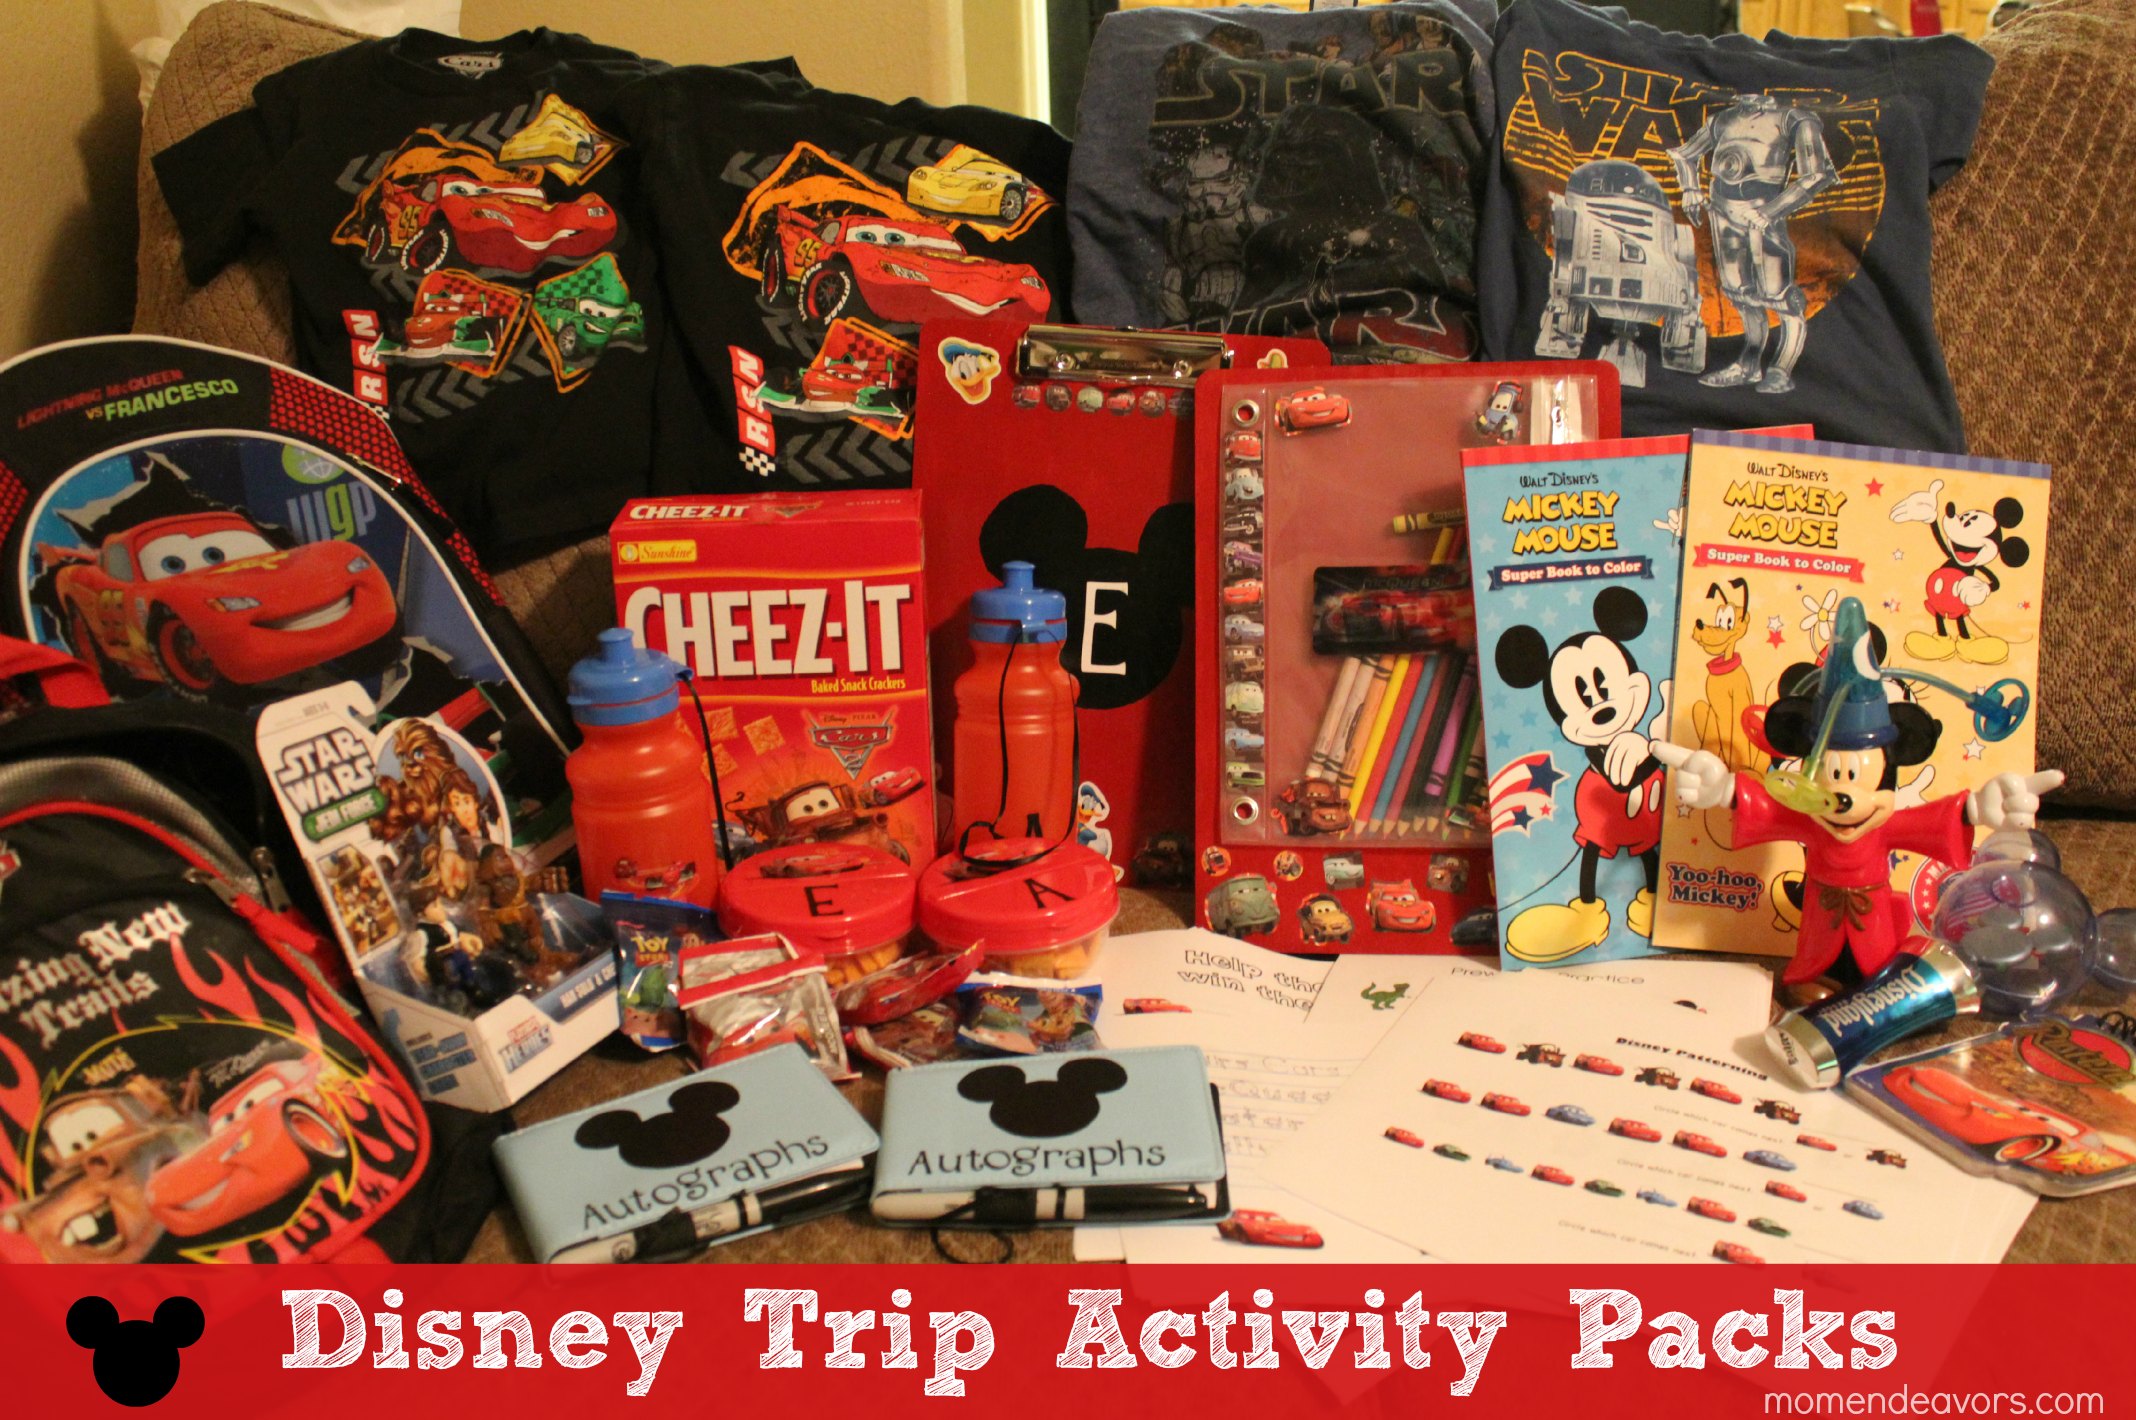 Disney Trip Activity Pack Items